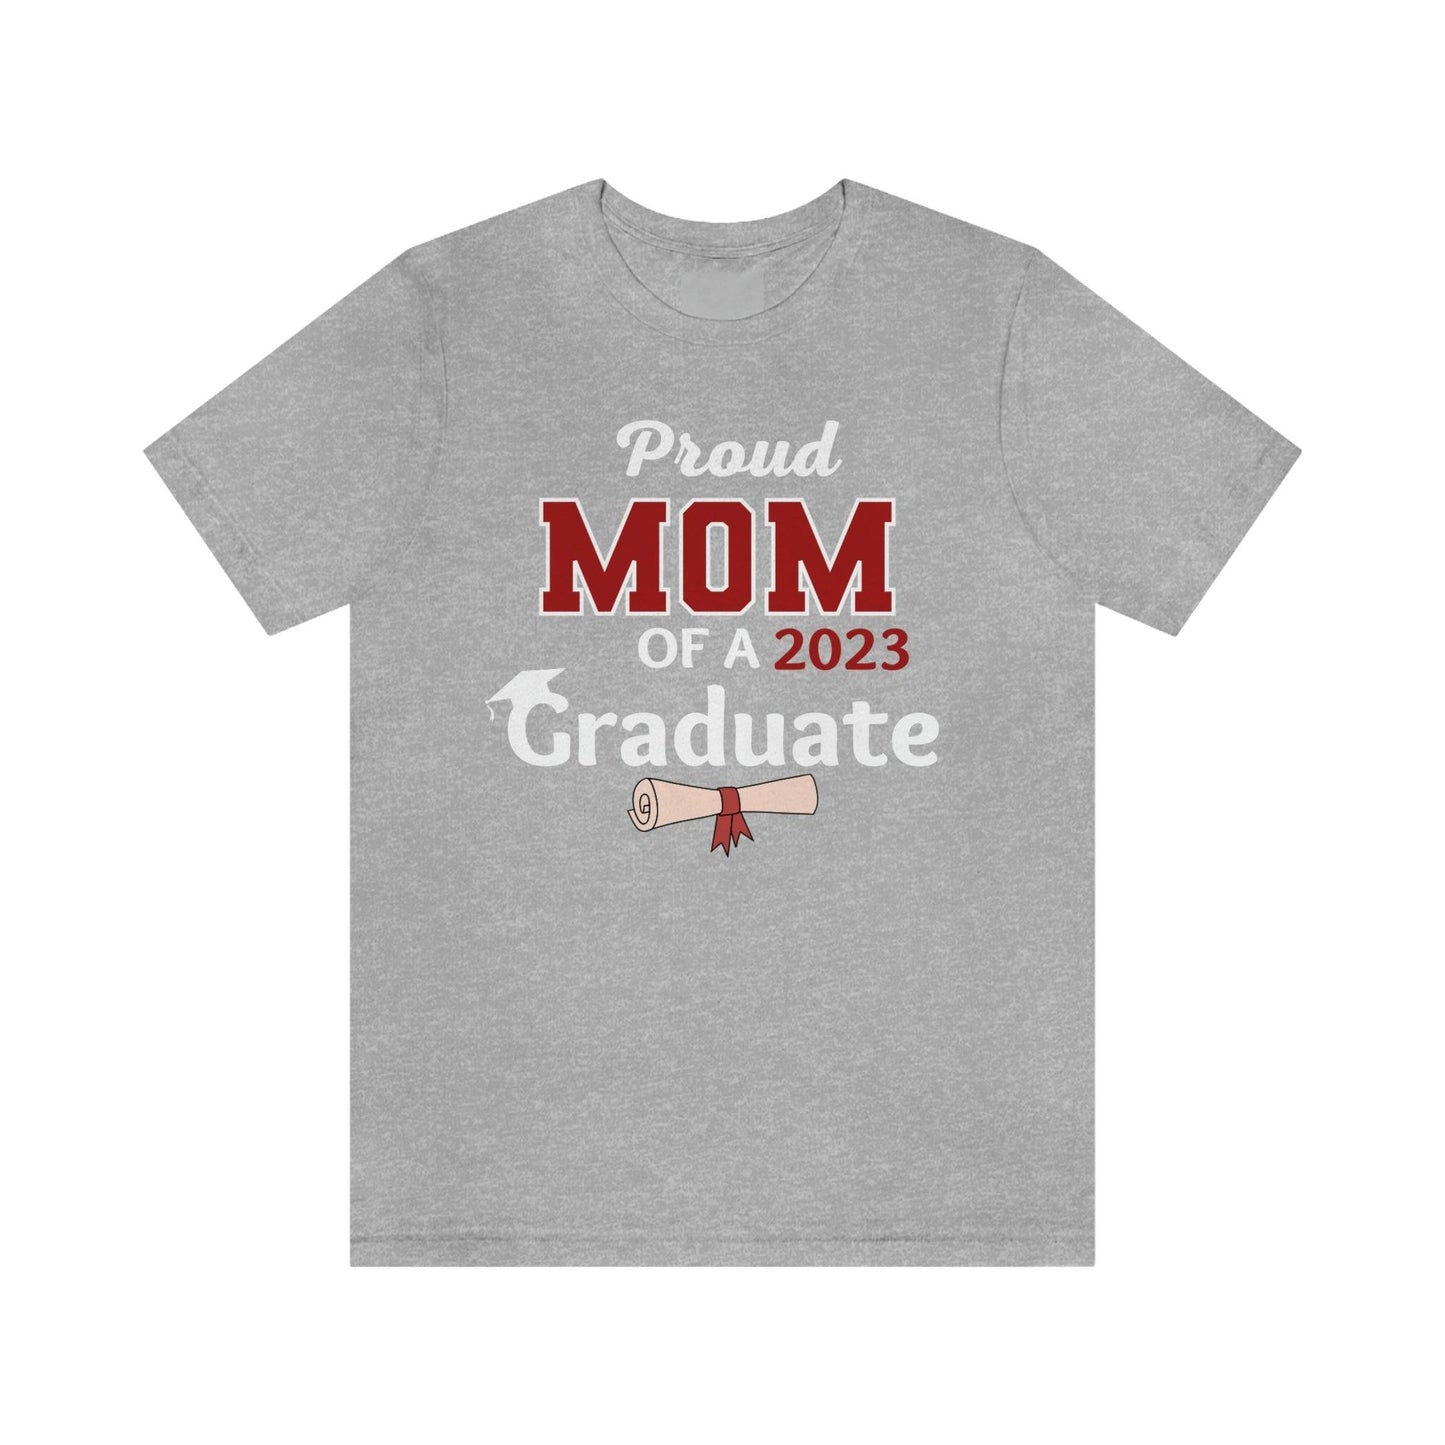 Proud mom of a Graduate shirt - Graduation shirt - Graduation gift - Giftsmojo